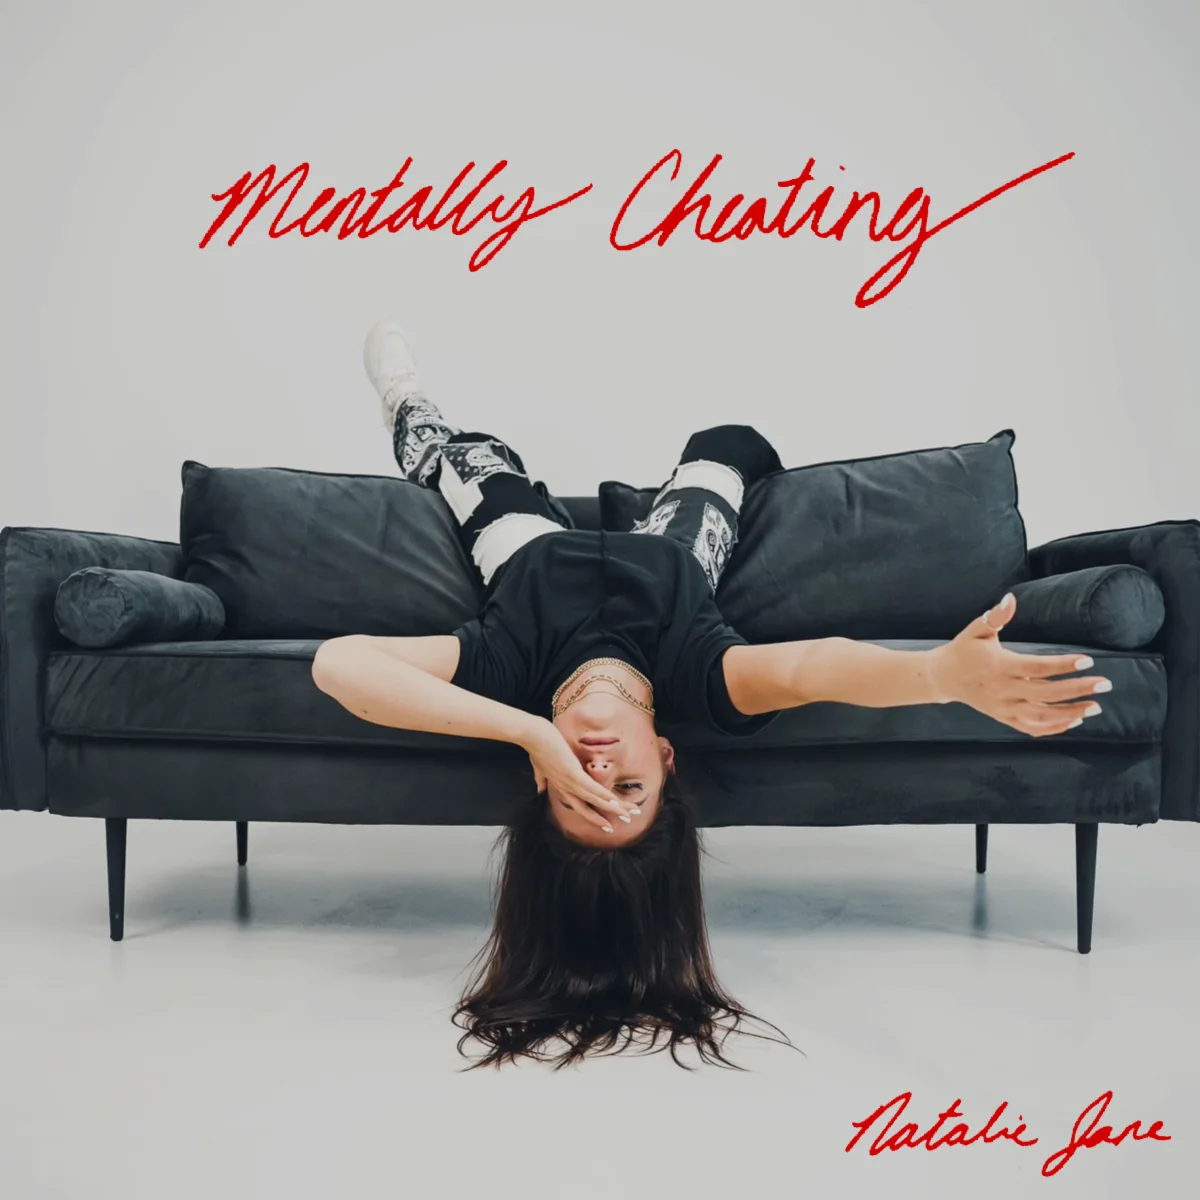 Natalie Jane "Mentally Cheating" single cover art via UMusic for use by 360 Magazine